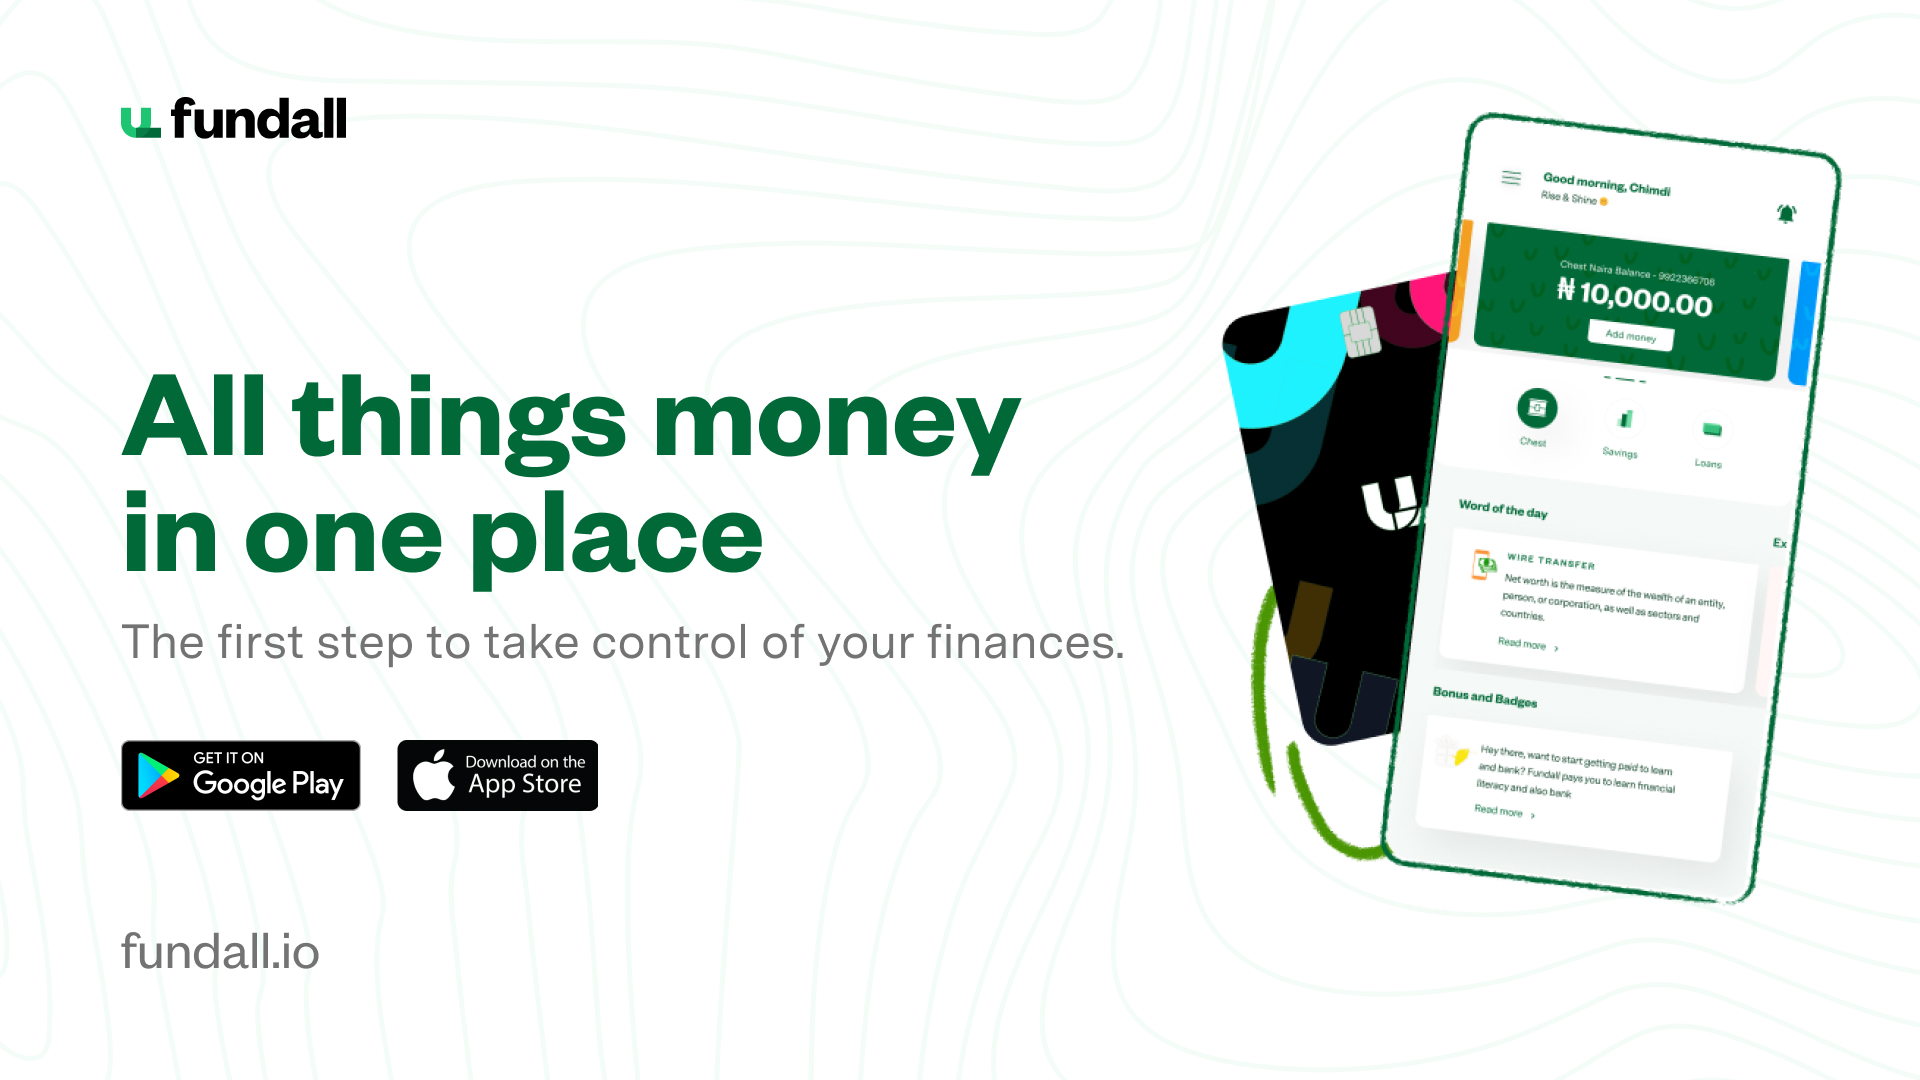 Bank, Plan, Save & Invest Money Online